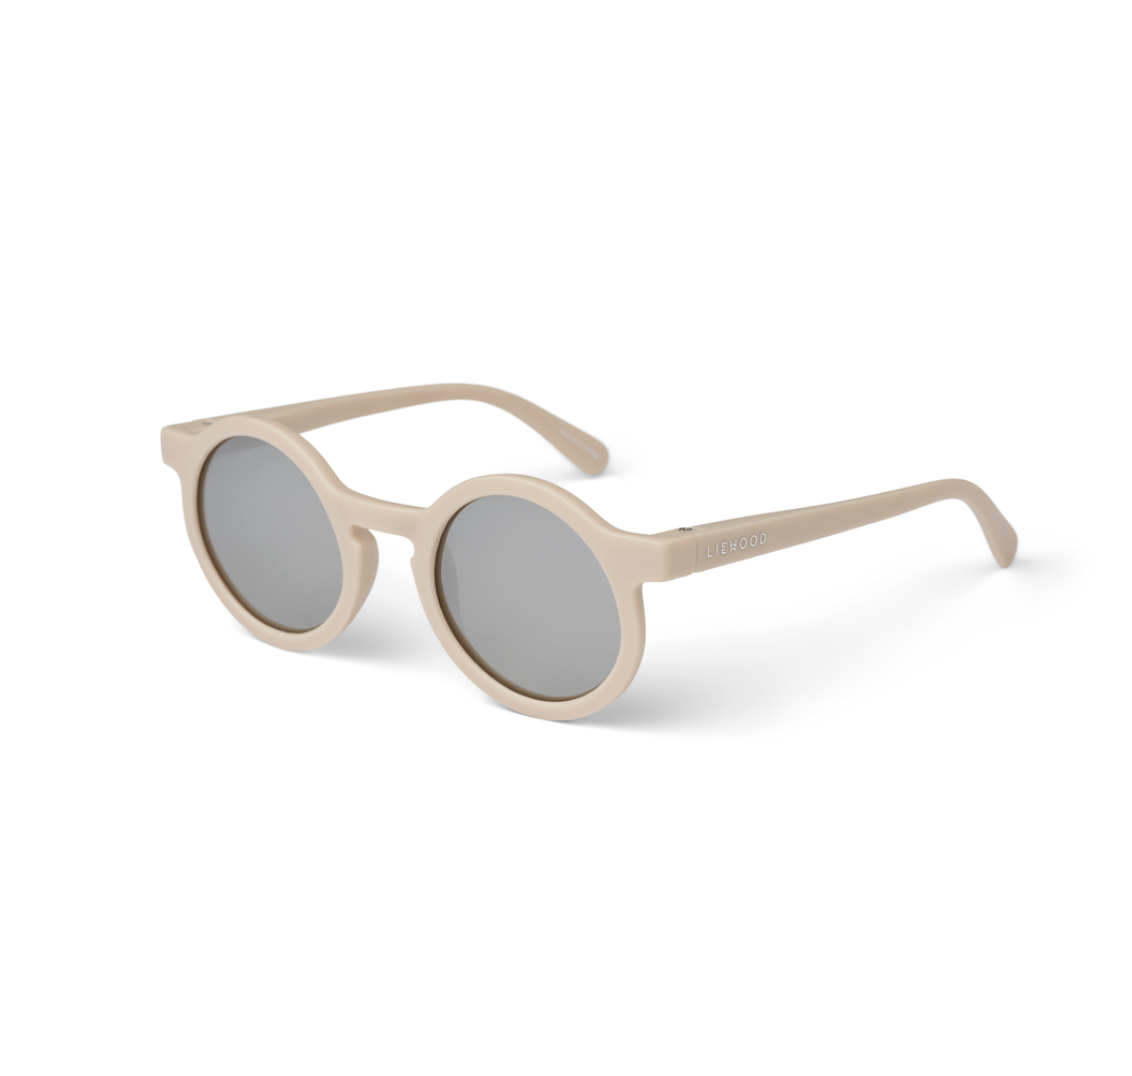 Liewood Darla Sunglasses